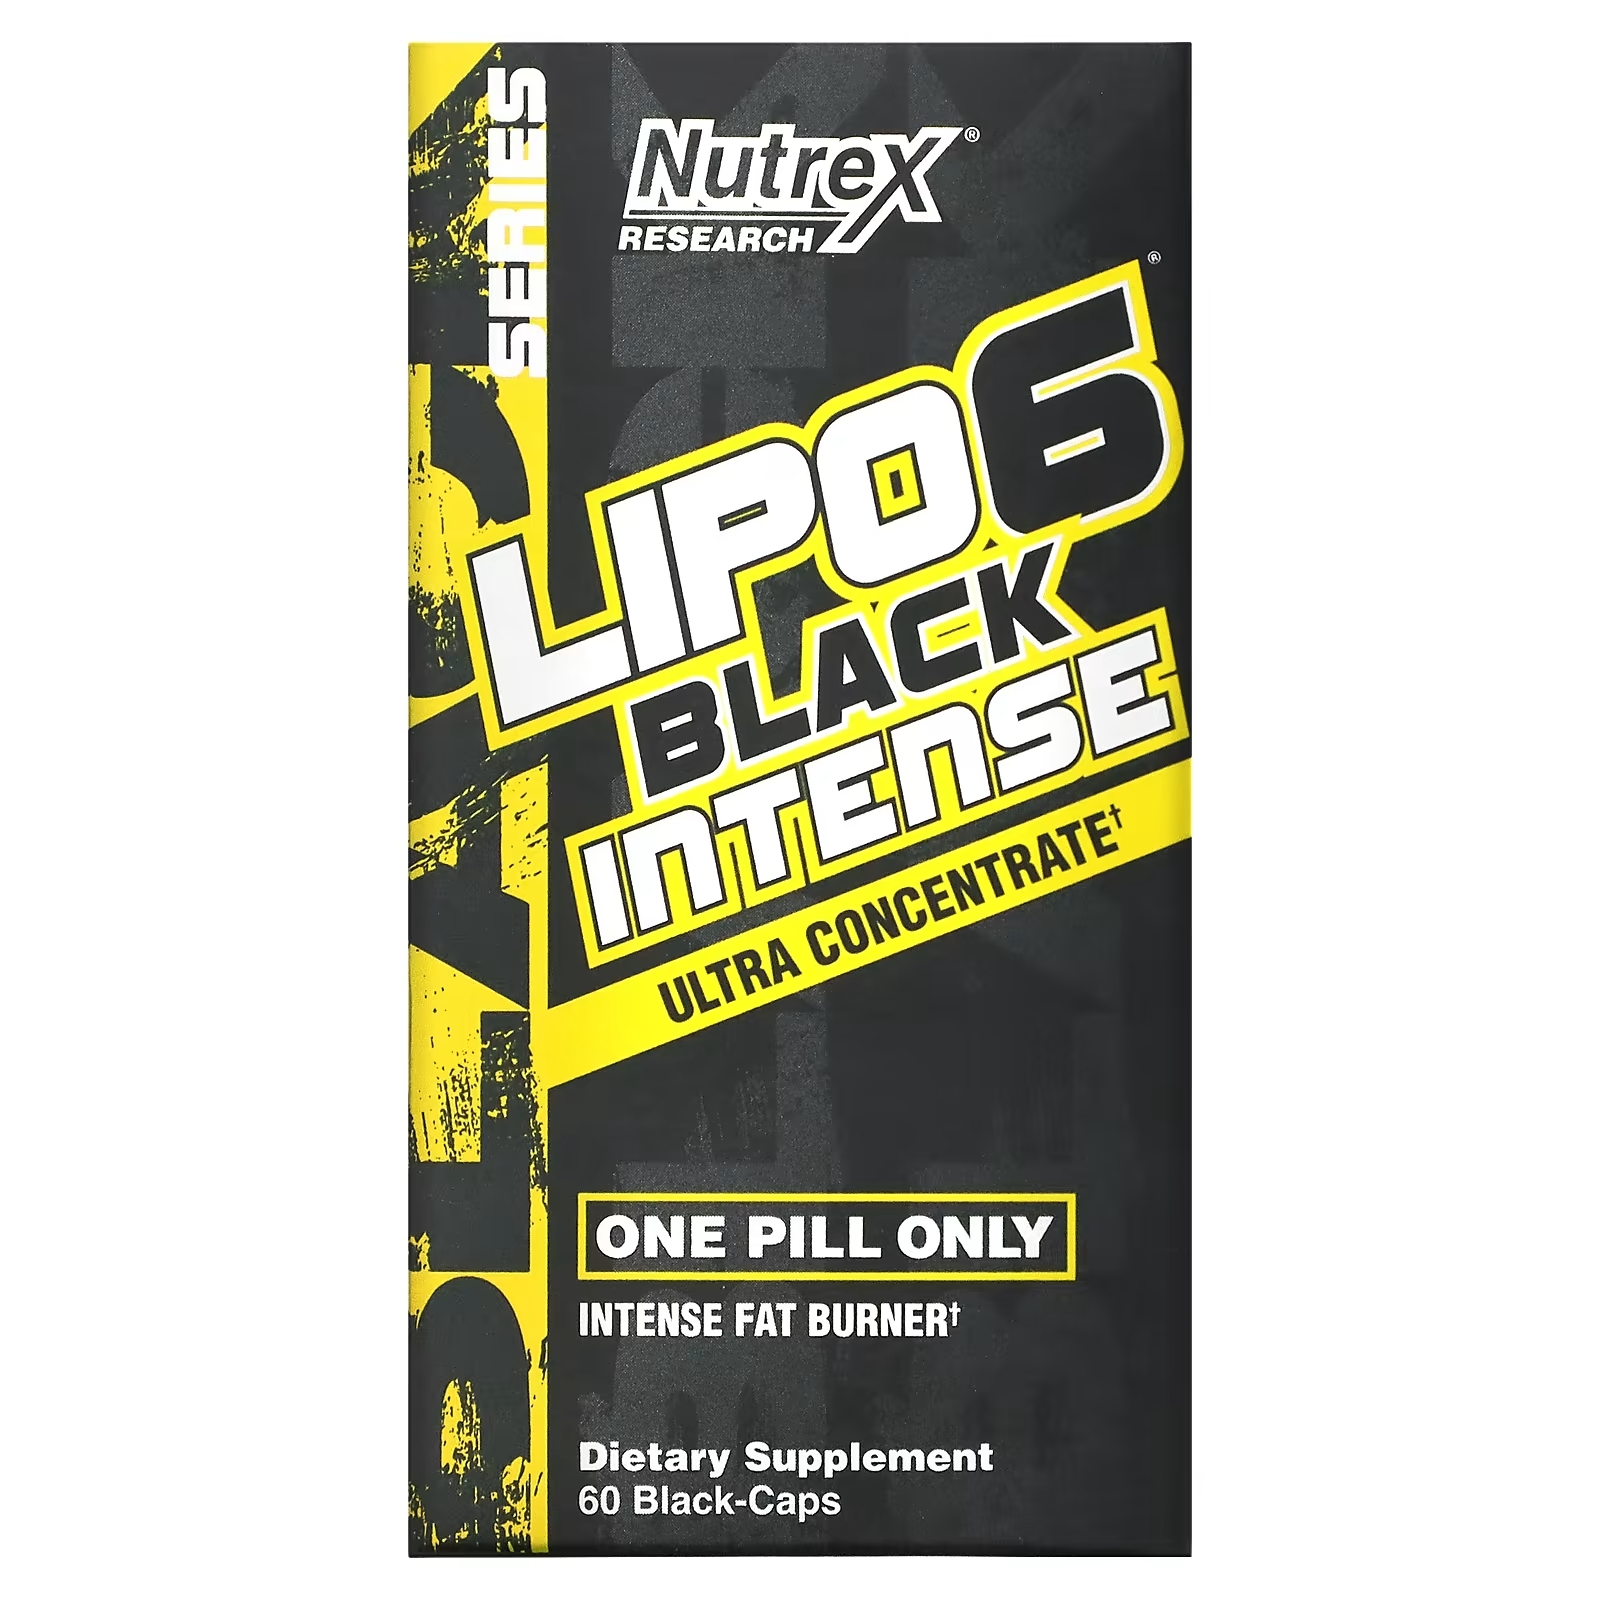 Ультраконцентрат Nutrex Research LIPO-6 Black Intense, 60 капсул nutrex lipo 6 black stim free 60 capsules